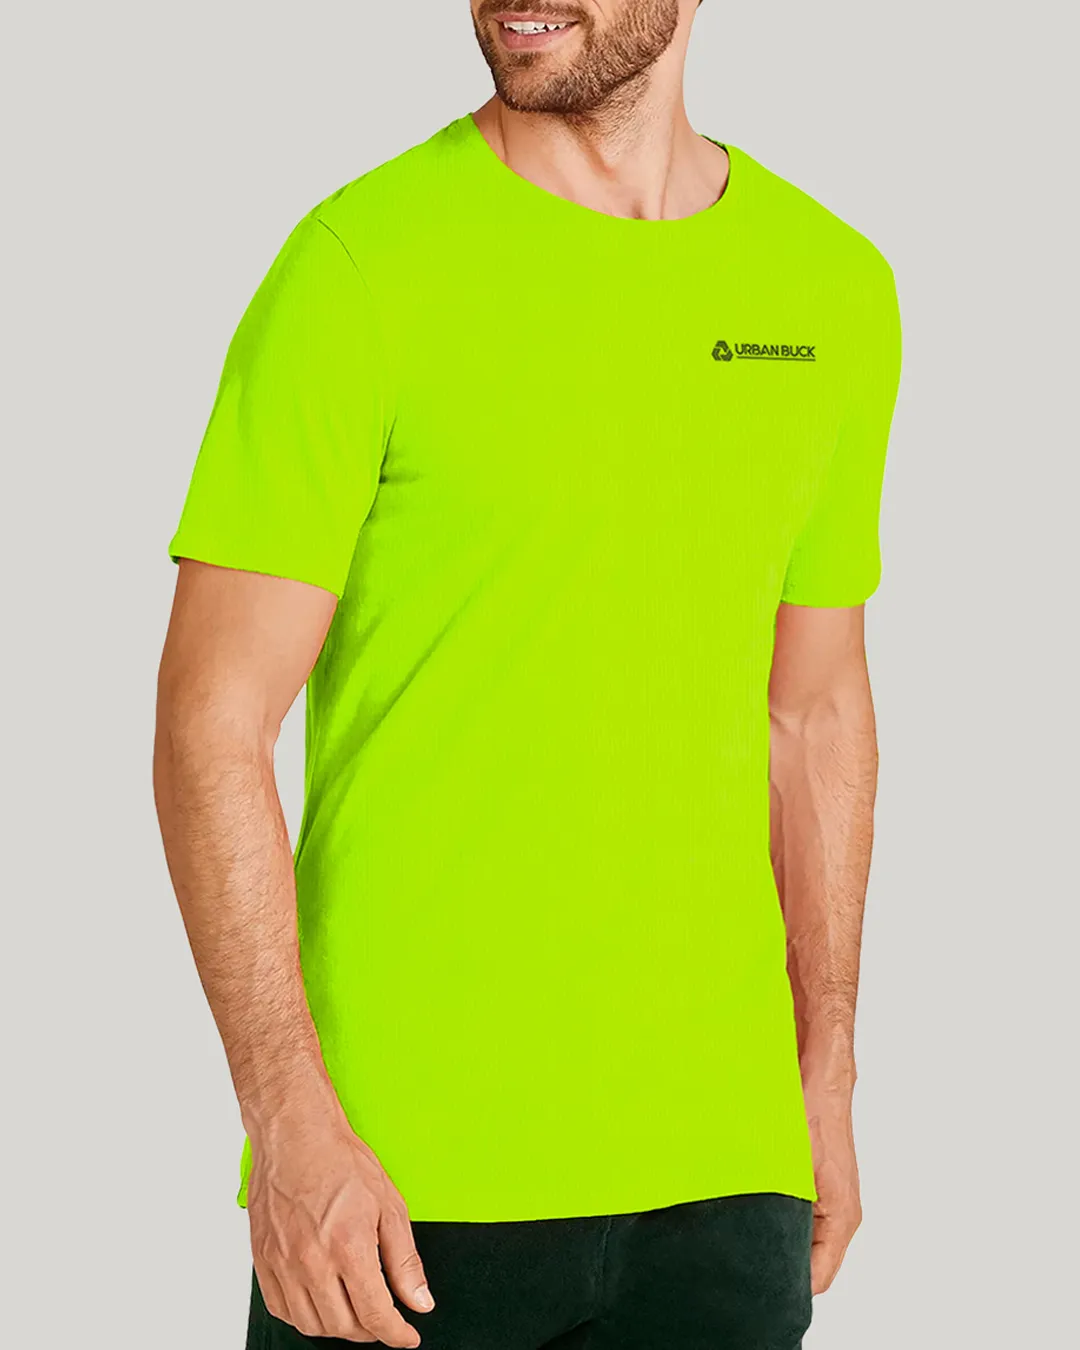 Men's neon half sleeve UV protection shirts - Urban Buck®